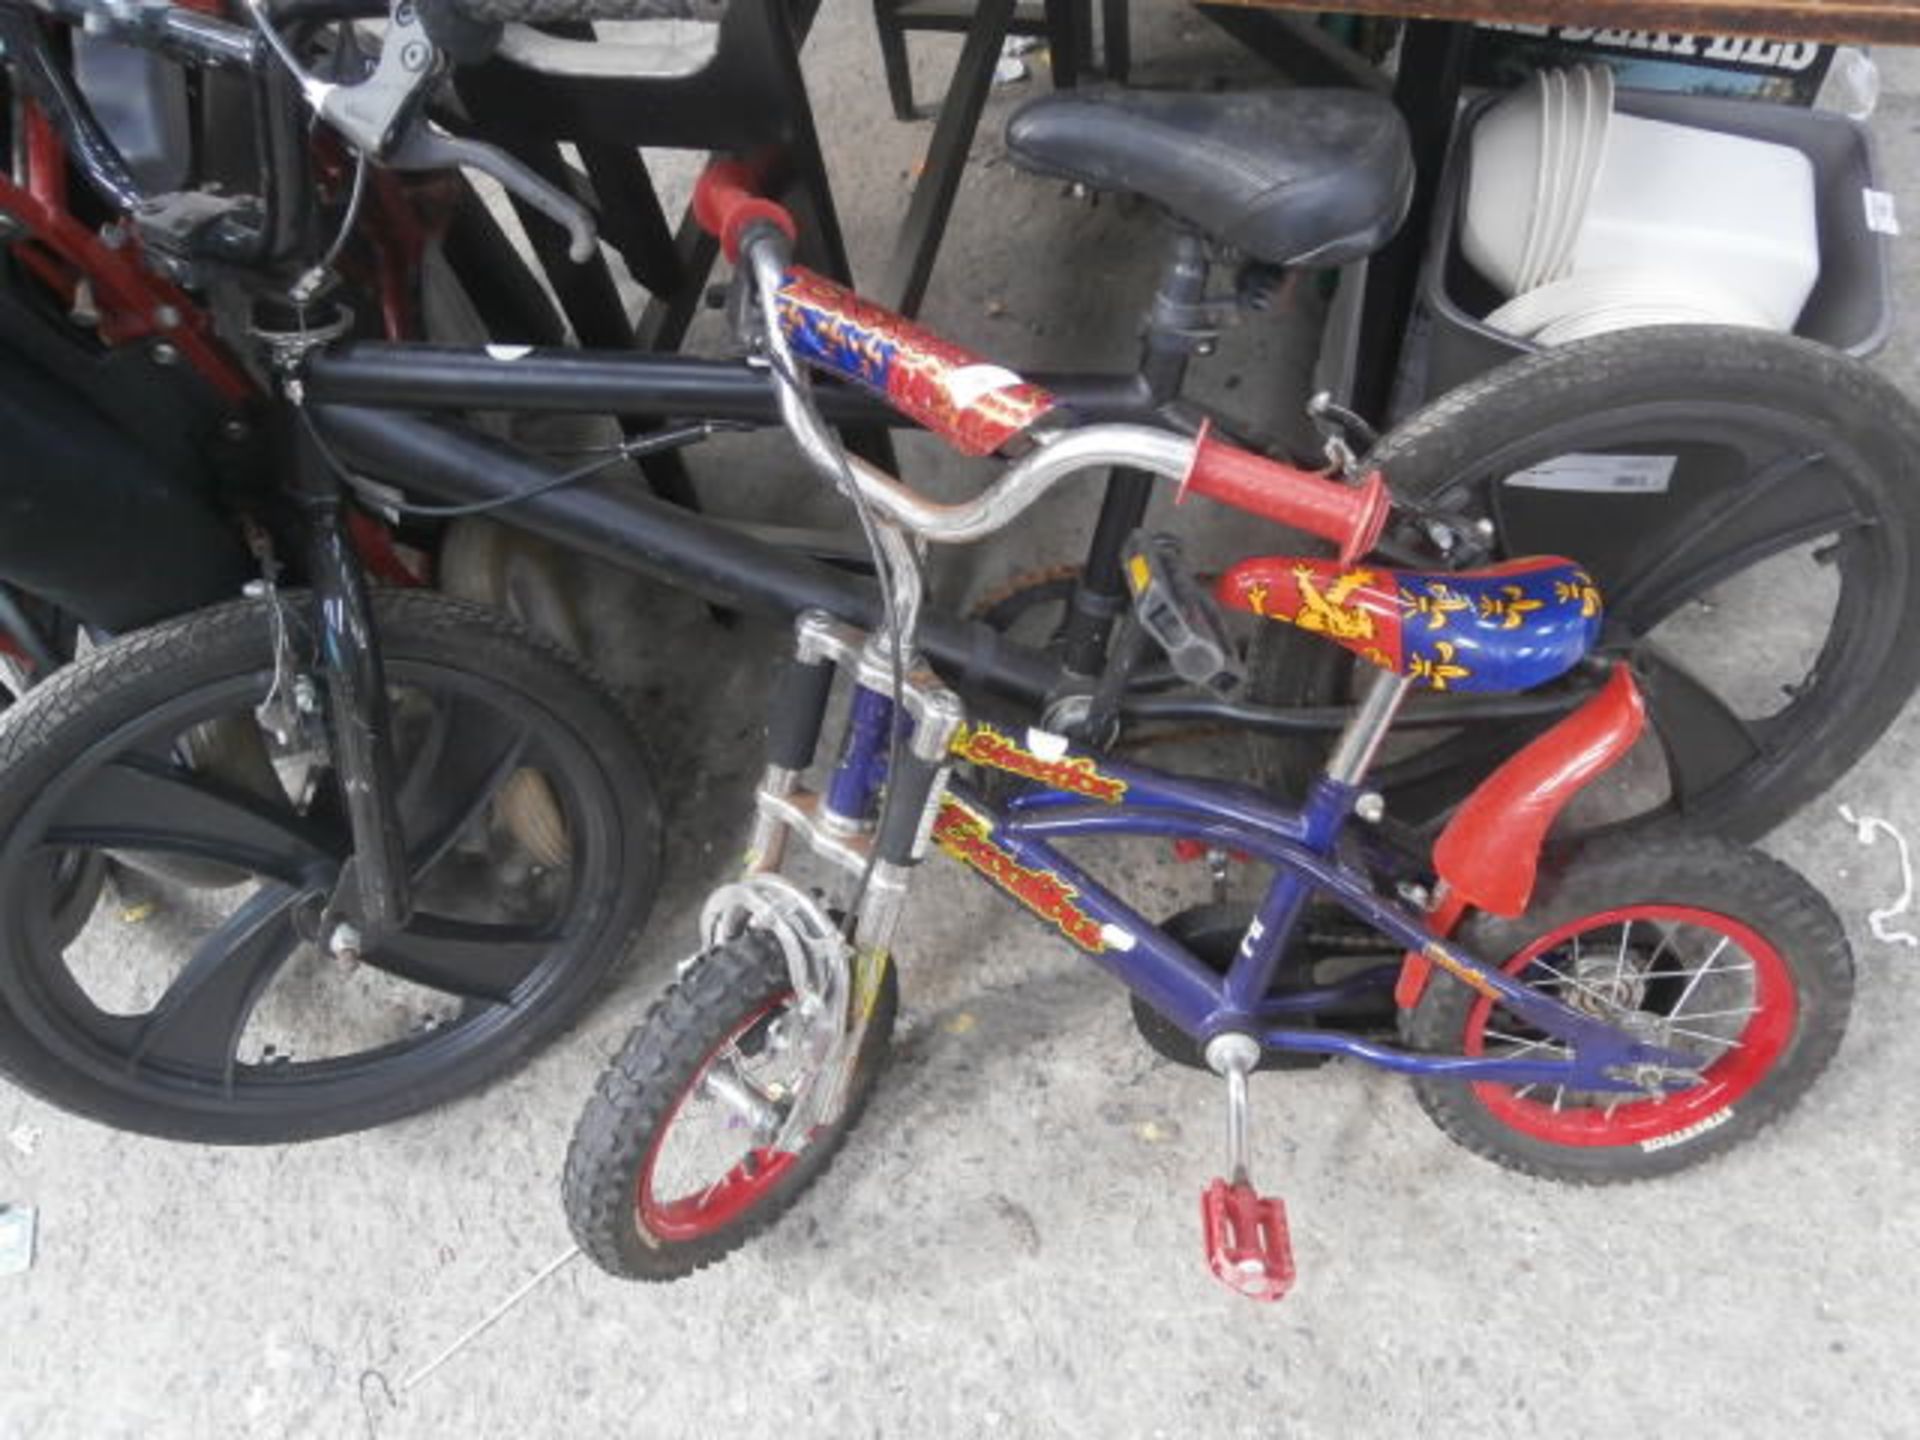 Pair of BMX bikes